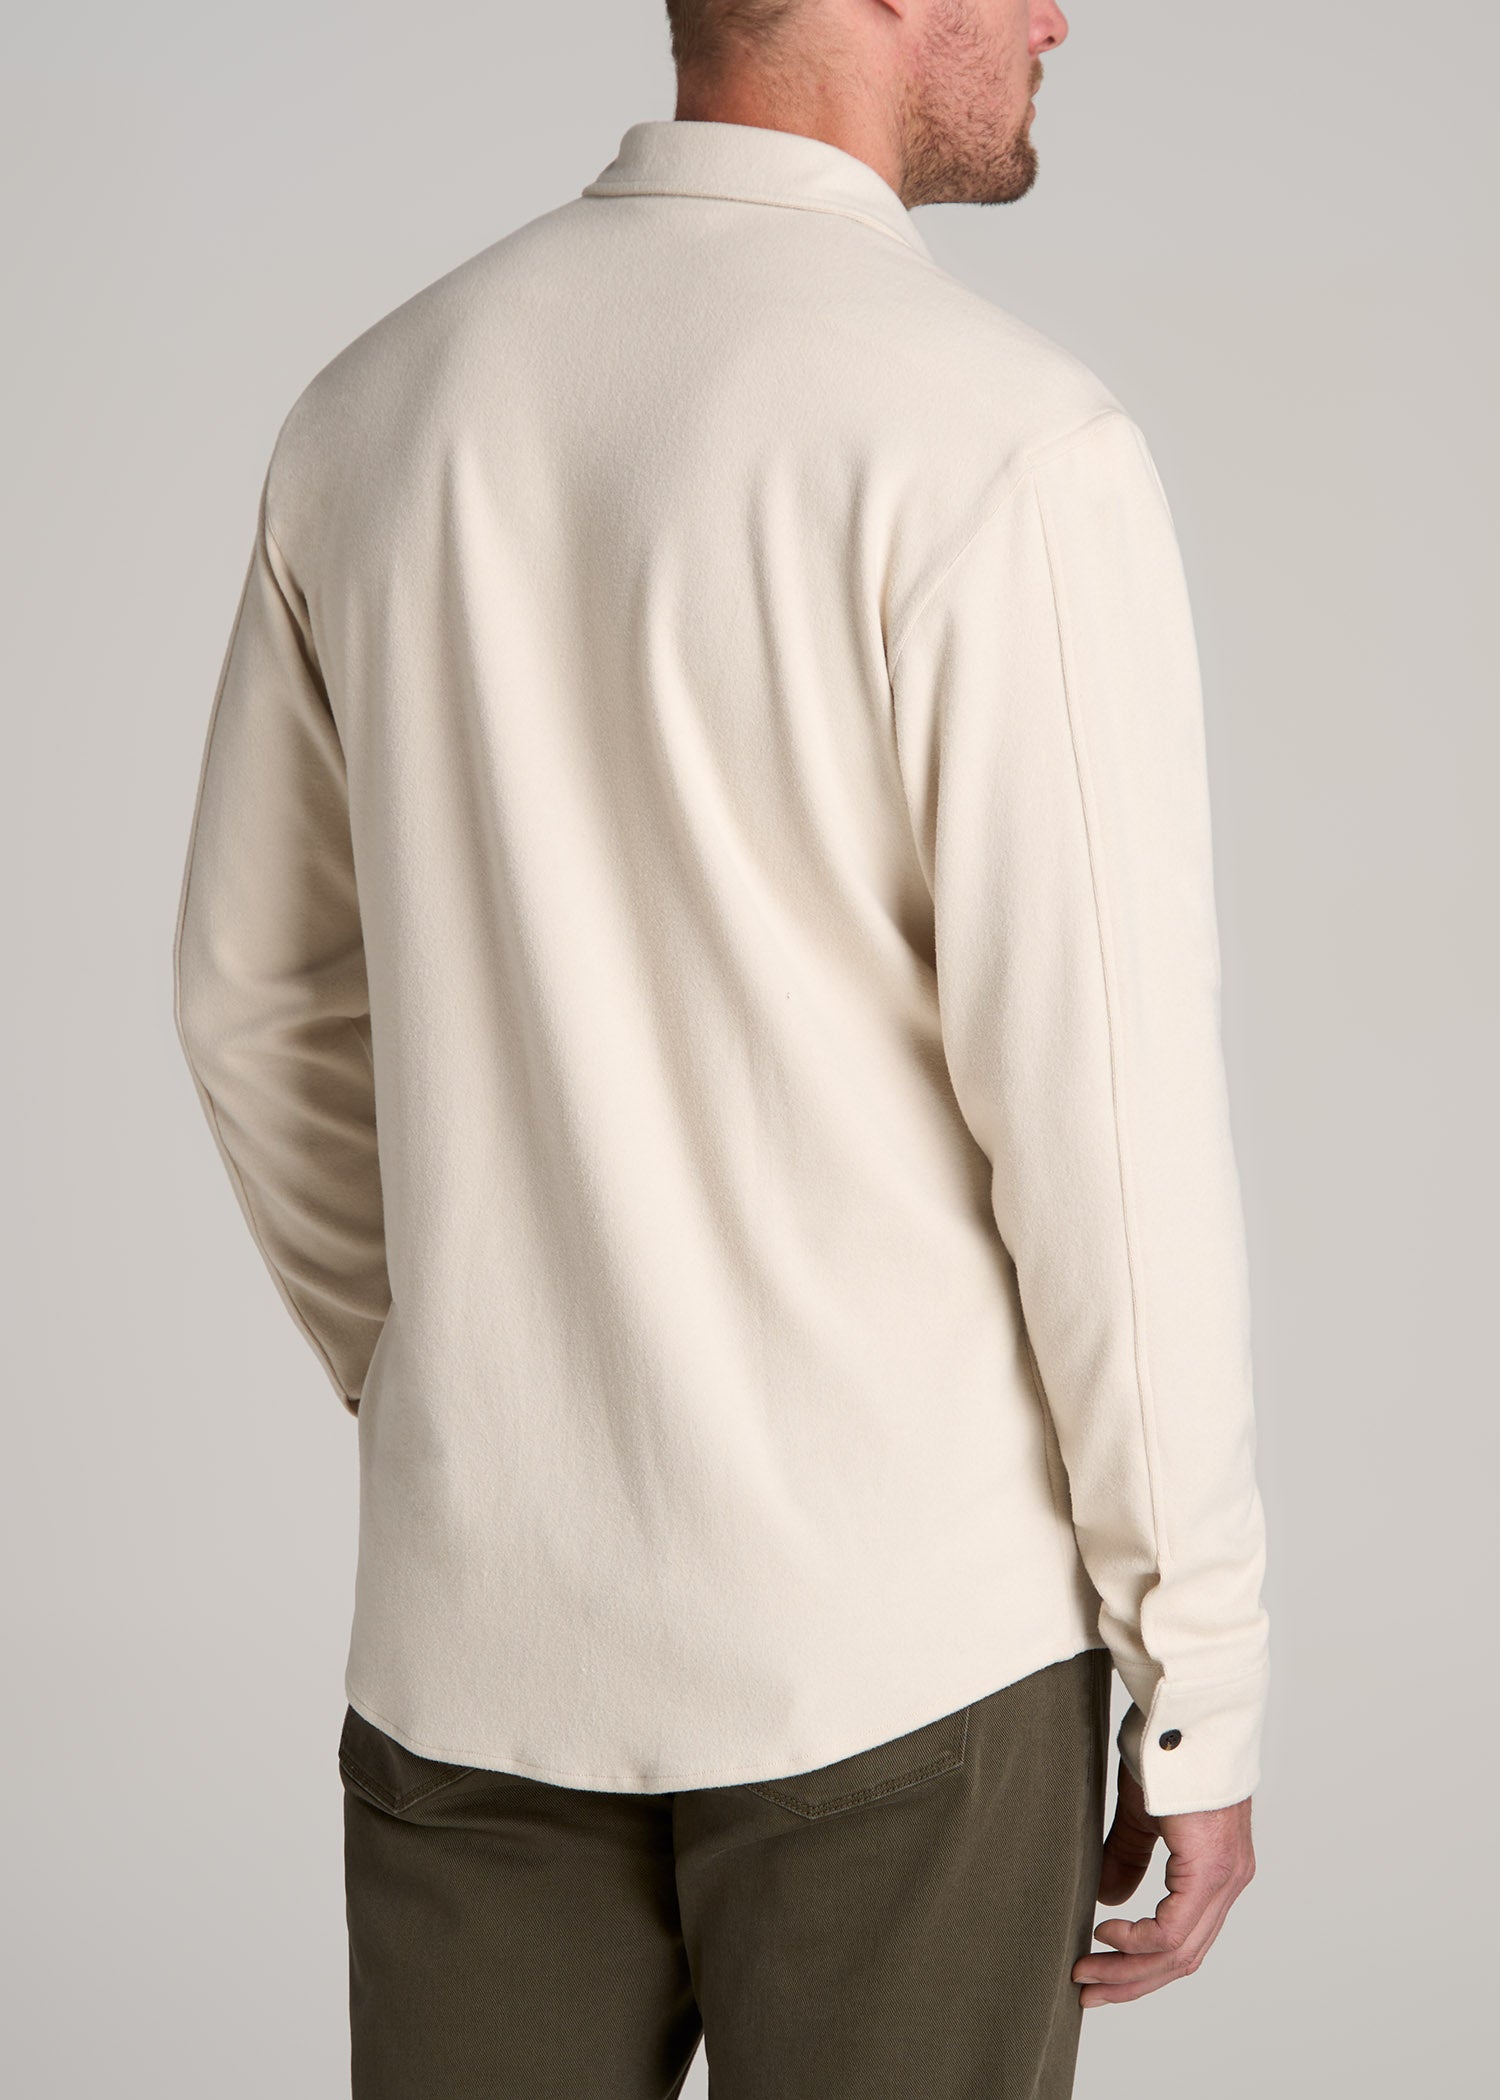 Stretch Flannel Button Tall Men's Shirt in Soft Beige